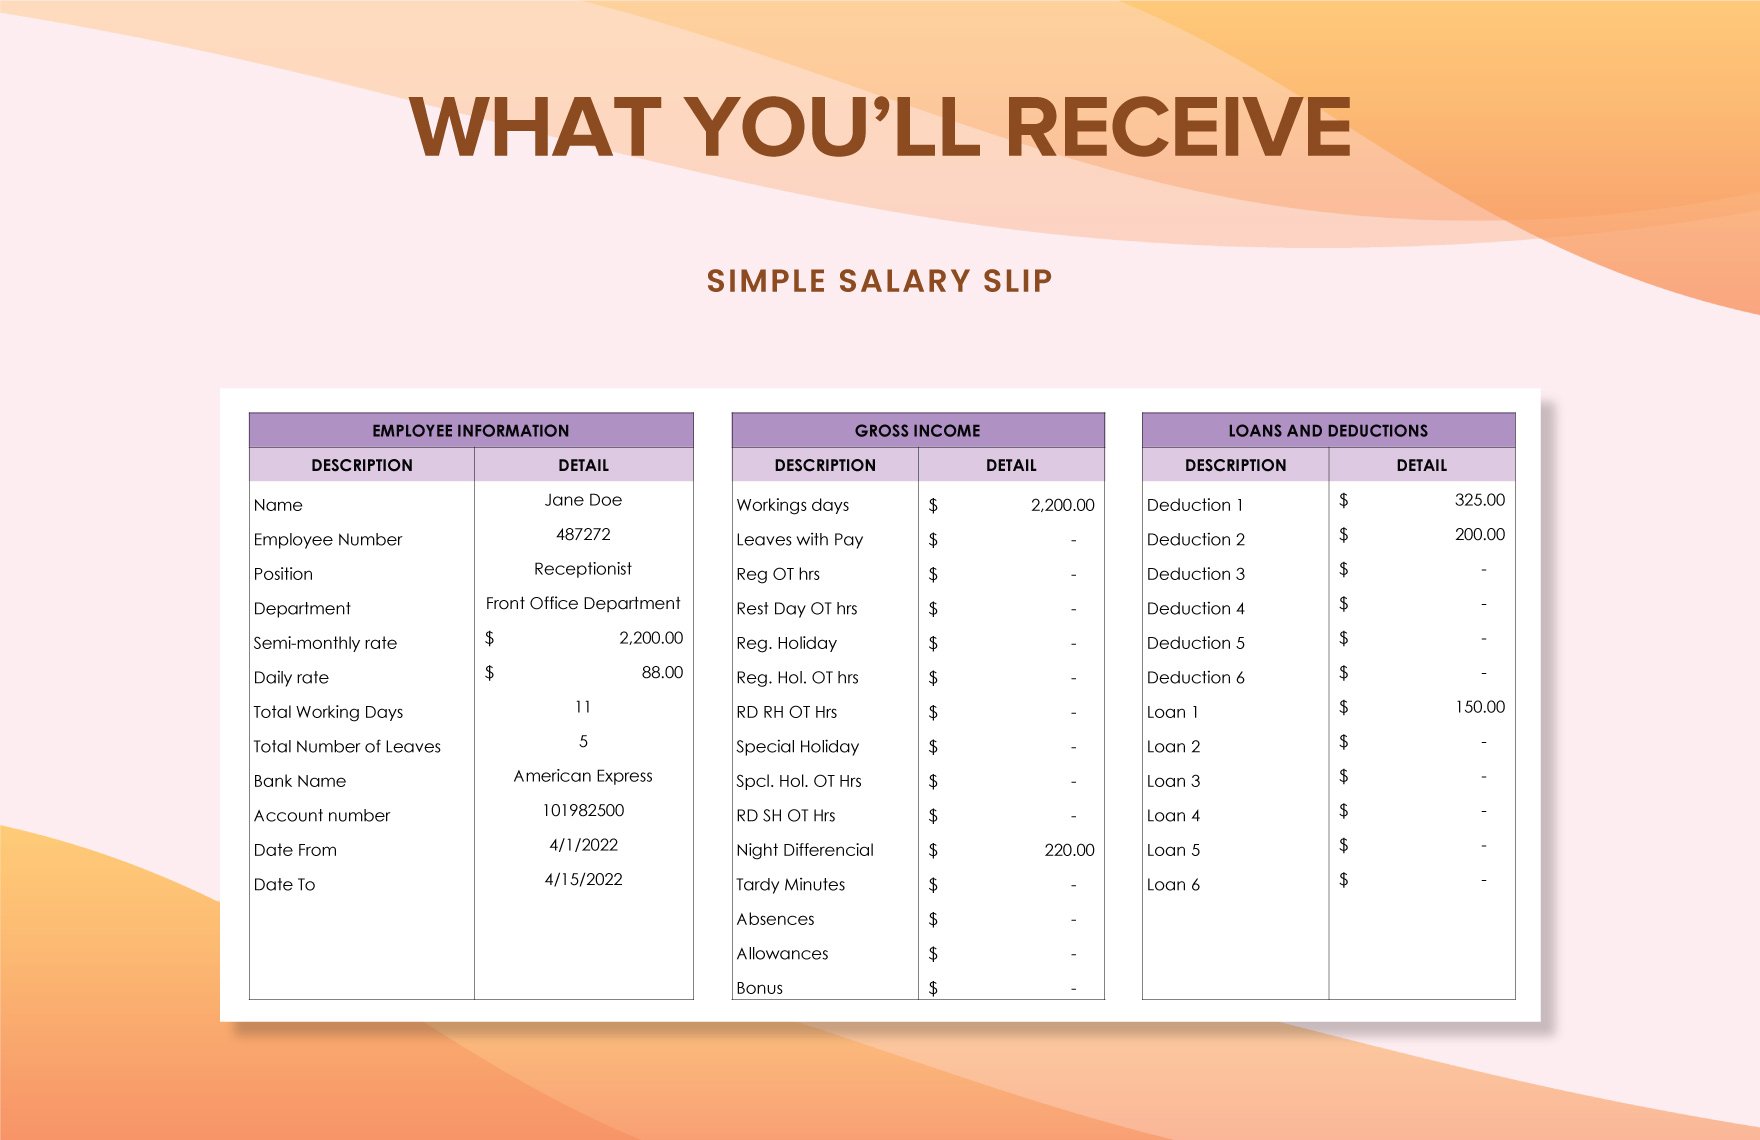 Simple Salary Slip